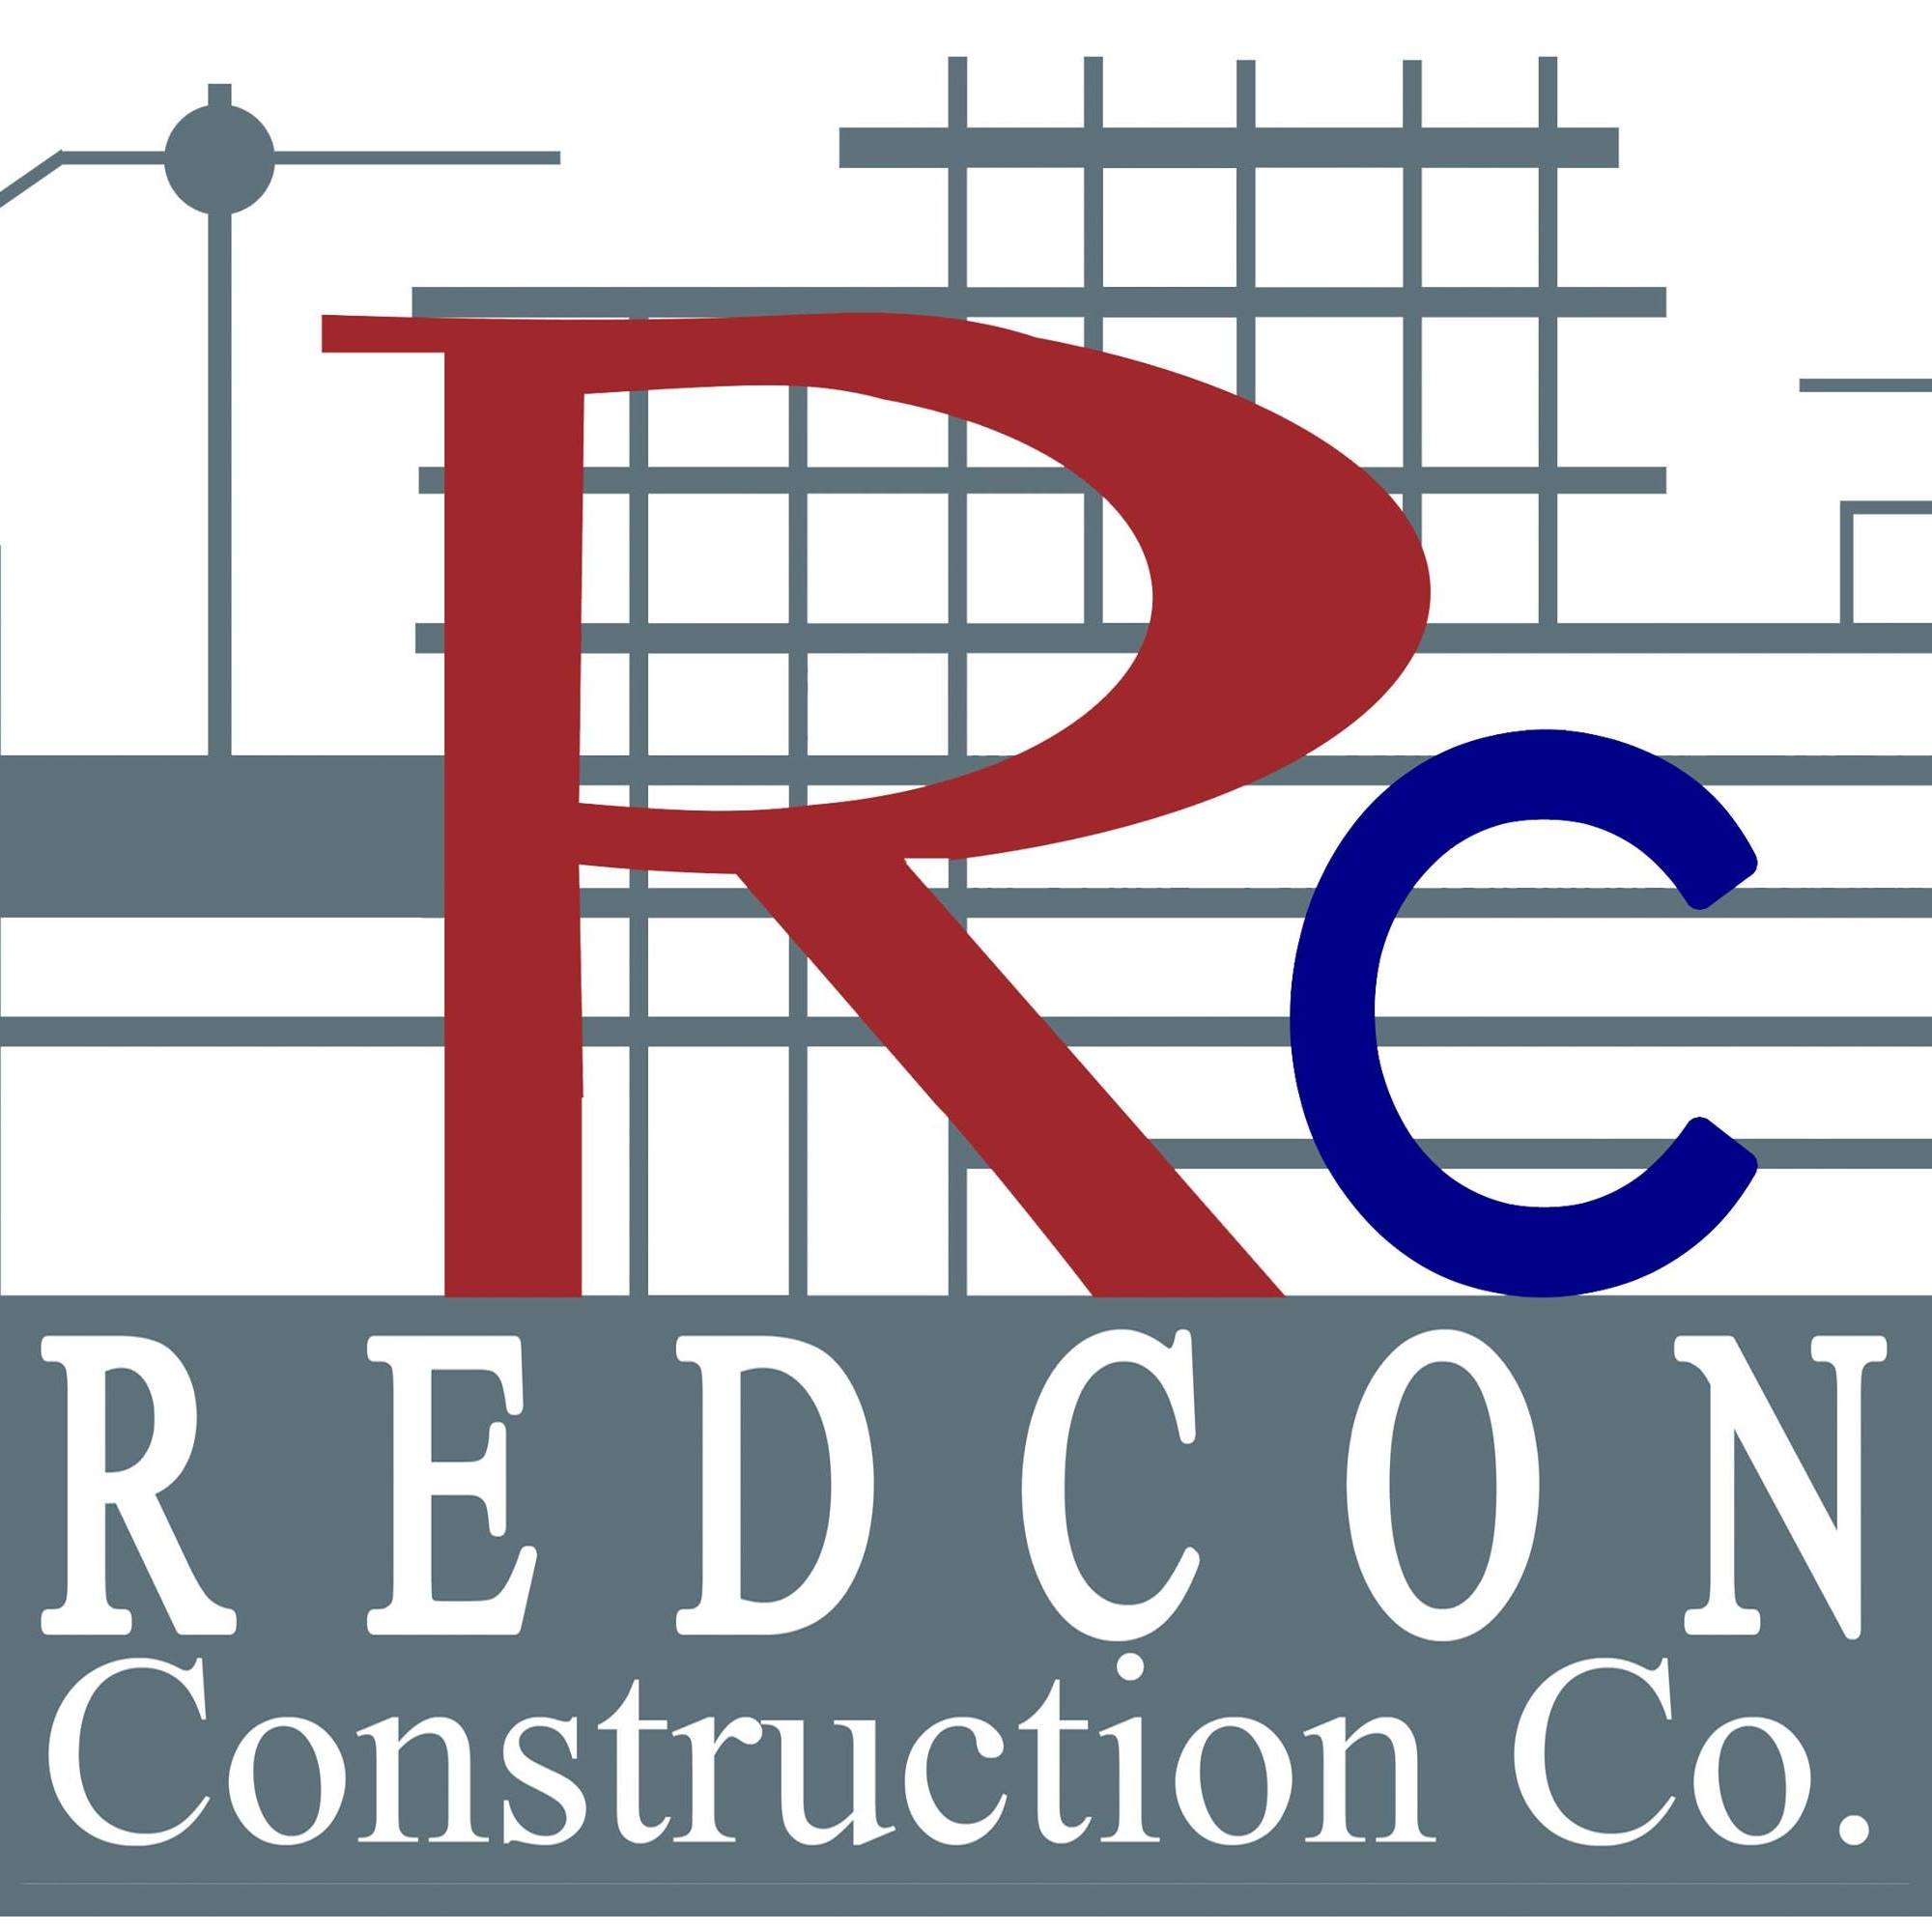 REDCON Construction Co.